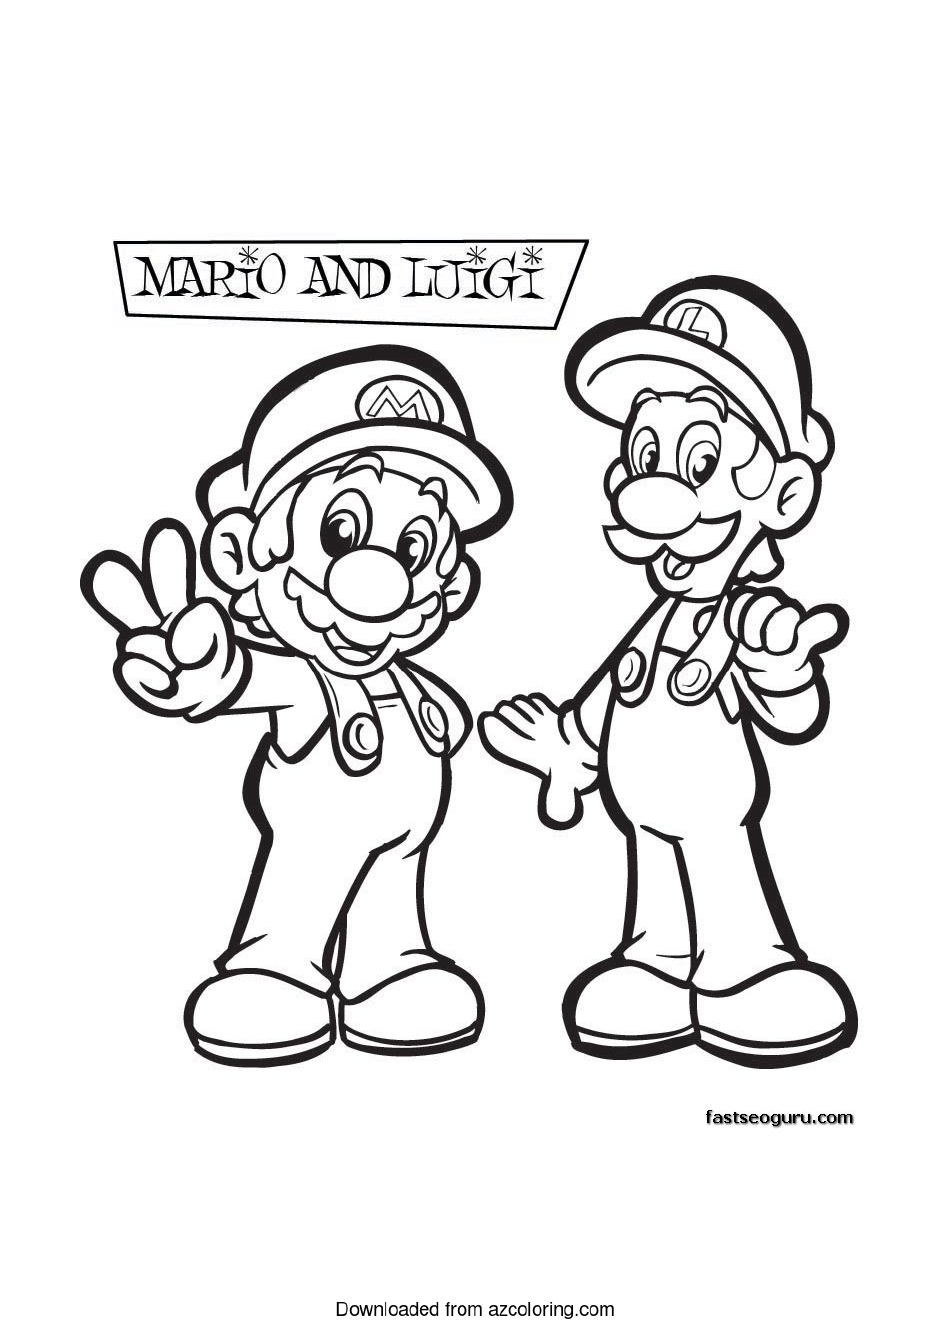 Mario and Luigi Coloring Page - Free Printable